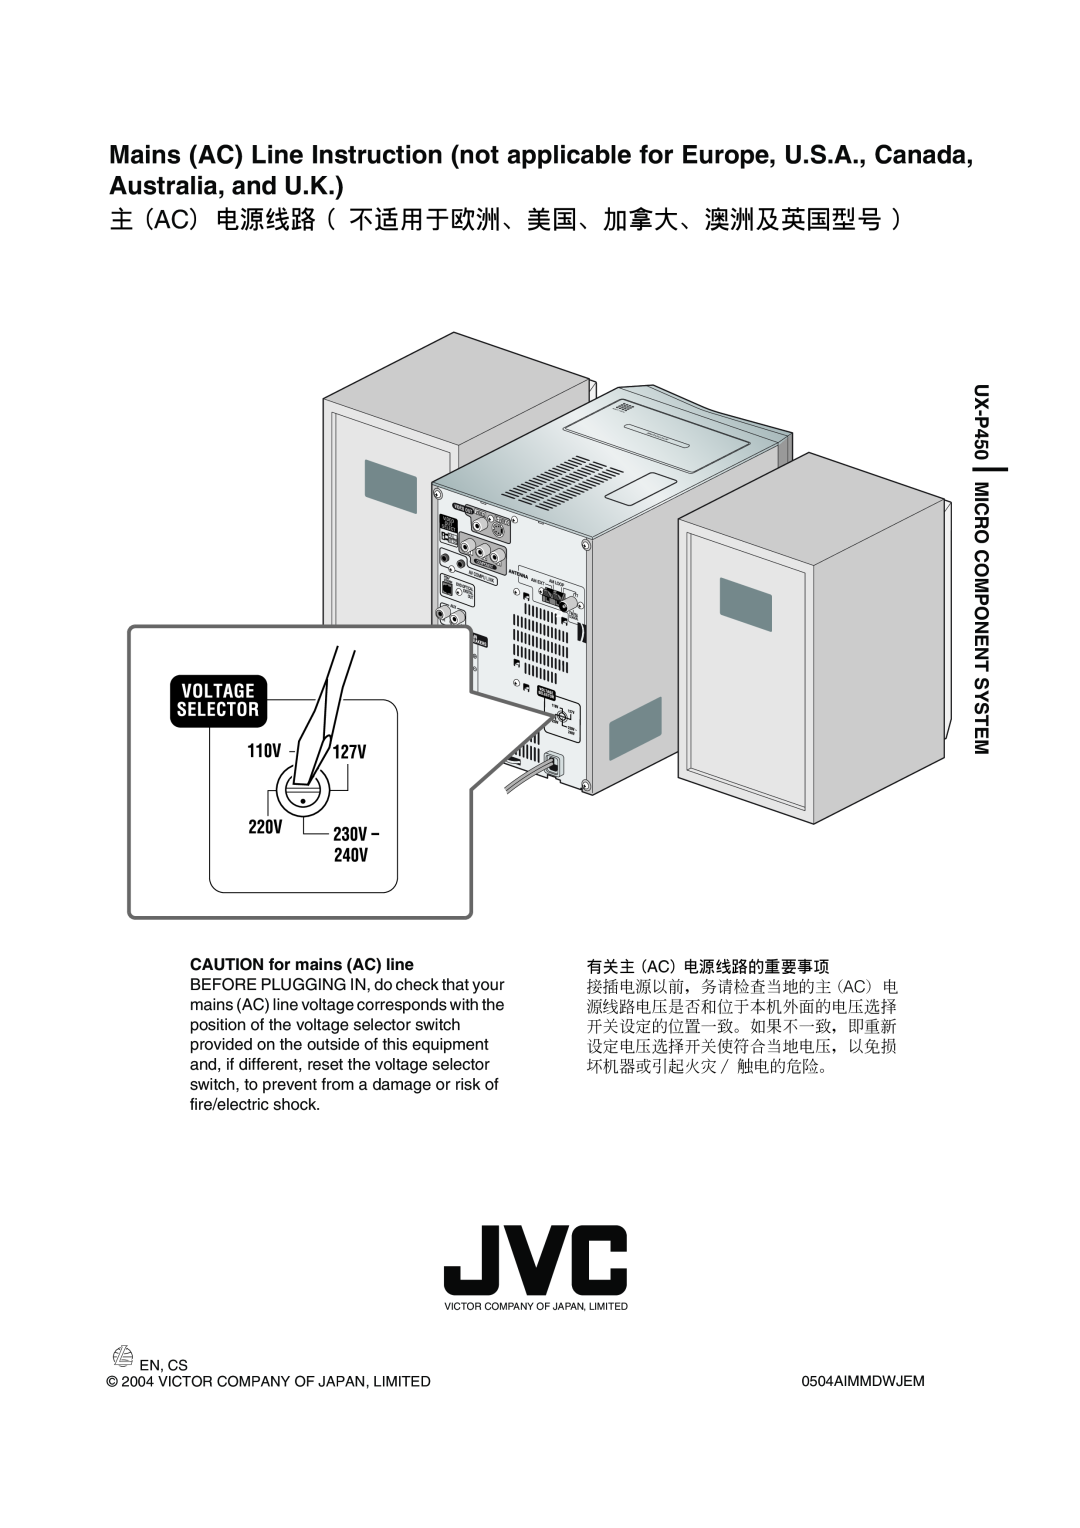 JVC manual UX-P450MICRO COMPONENT SYSTEM, 主 Ac 電源線路 不適用于歐洲、美國、加拿大、澳洲及英國型號, CAUTION for mains AC line, 有關主 Ac 電源線路的重要事項 